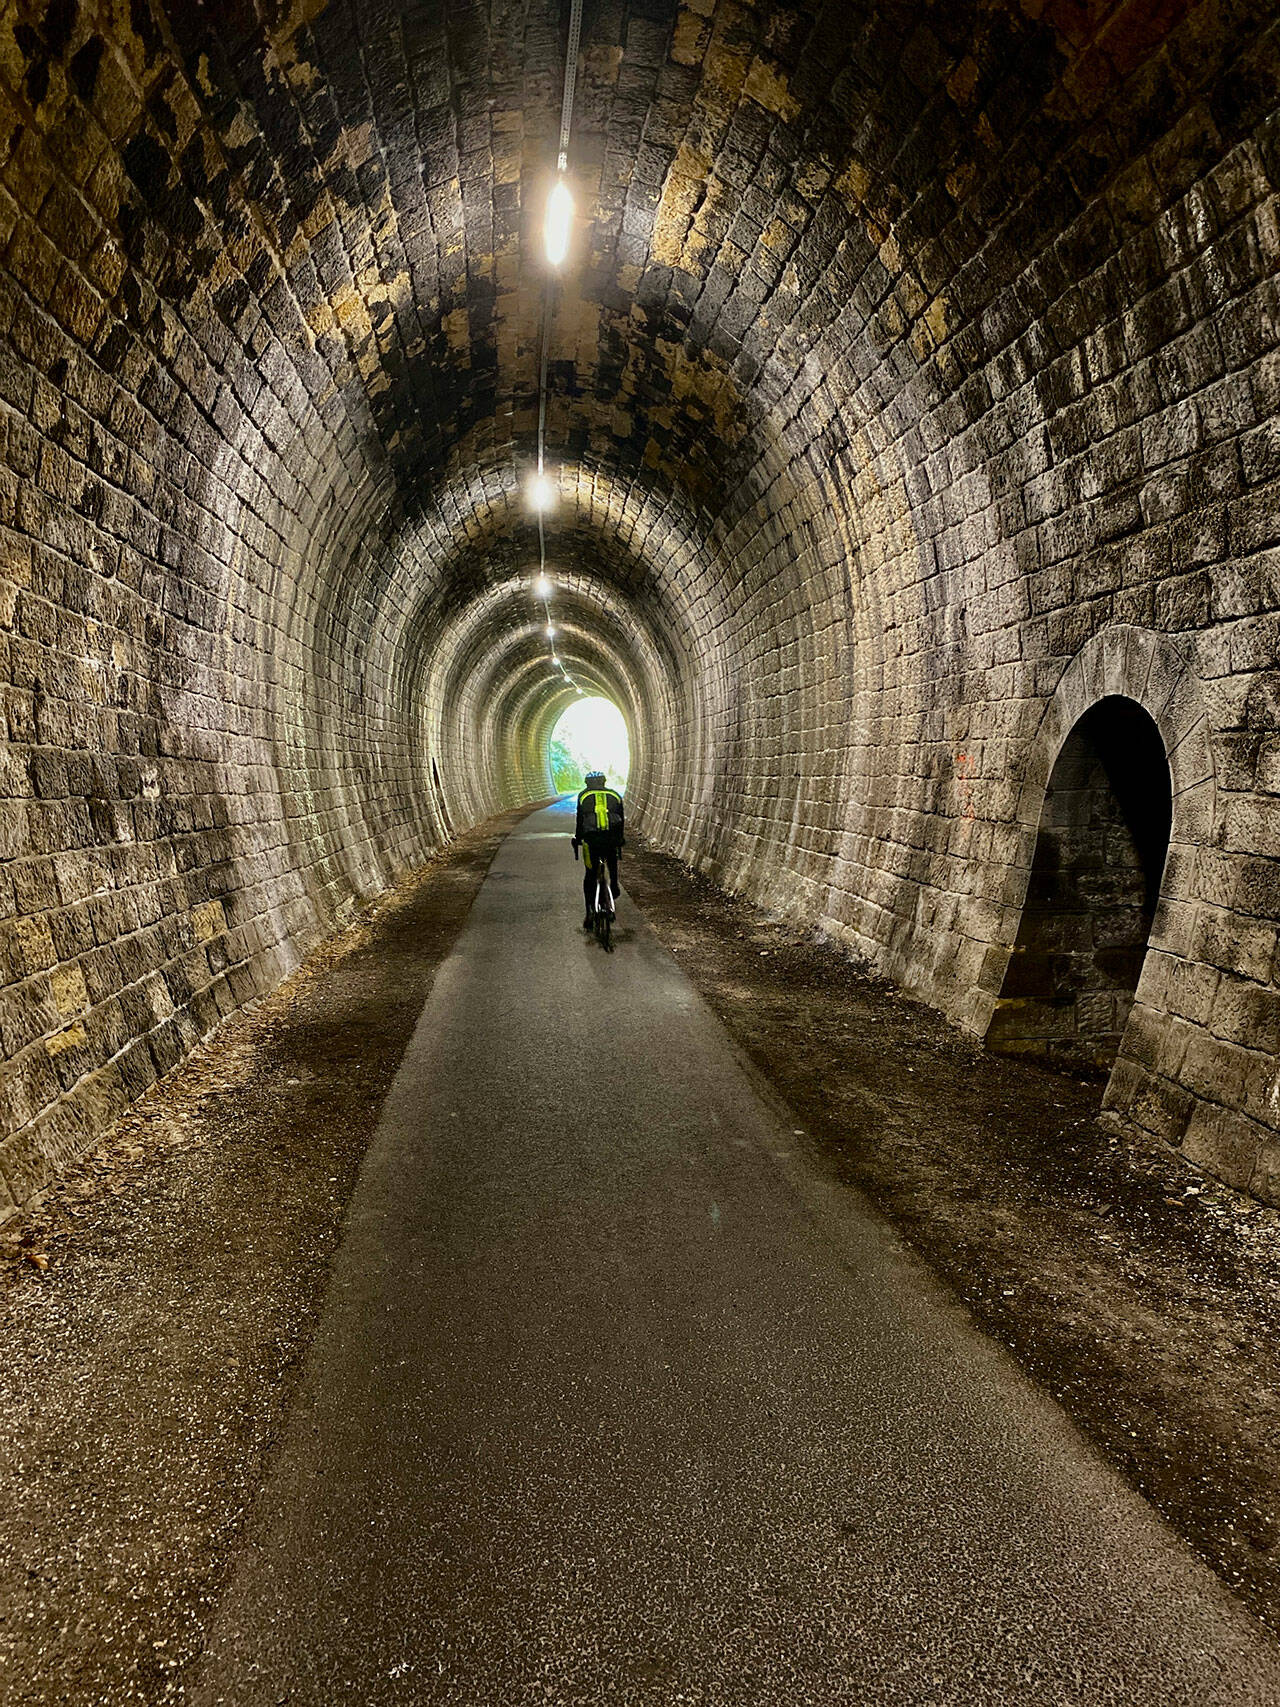 Left: A bike tunnel outside of Bordeaux, France.